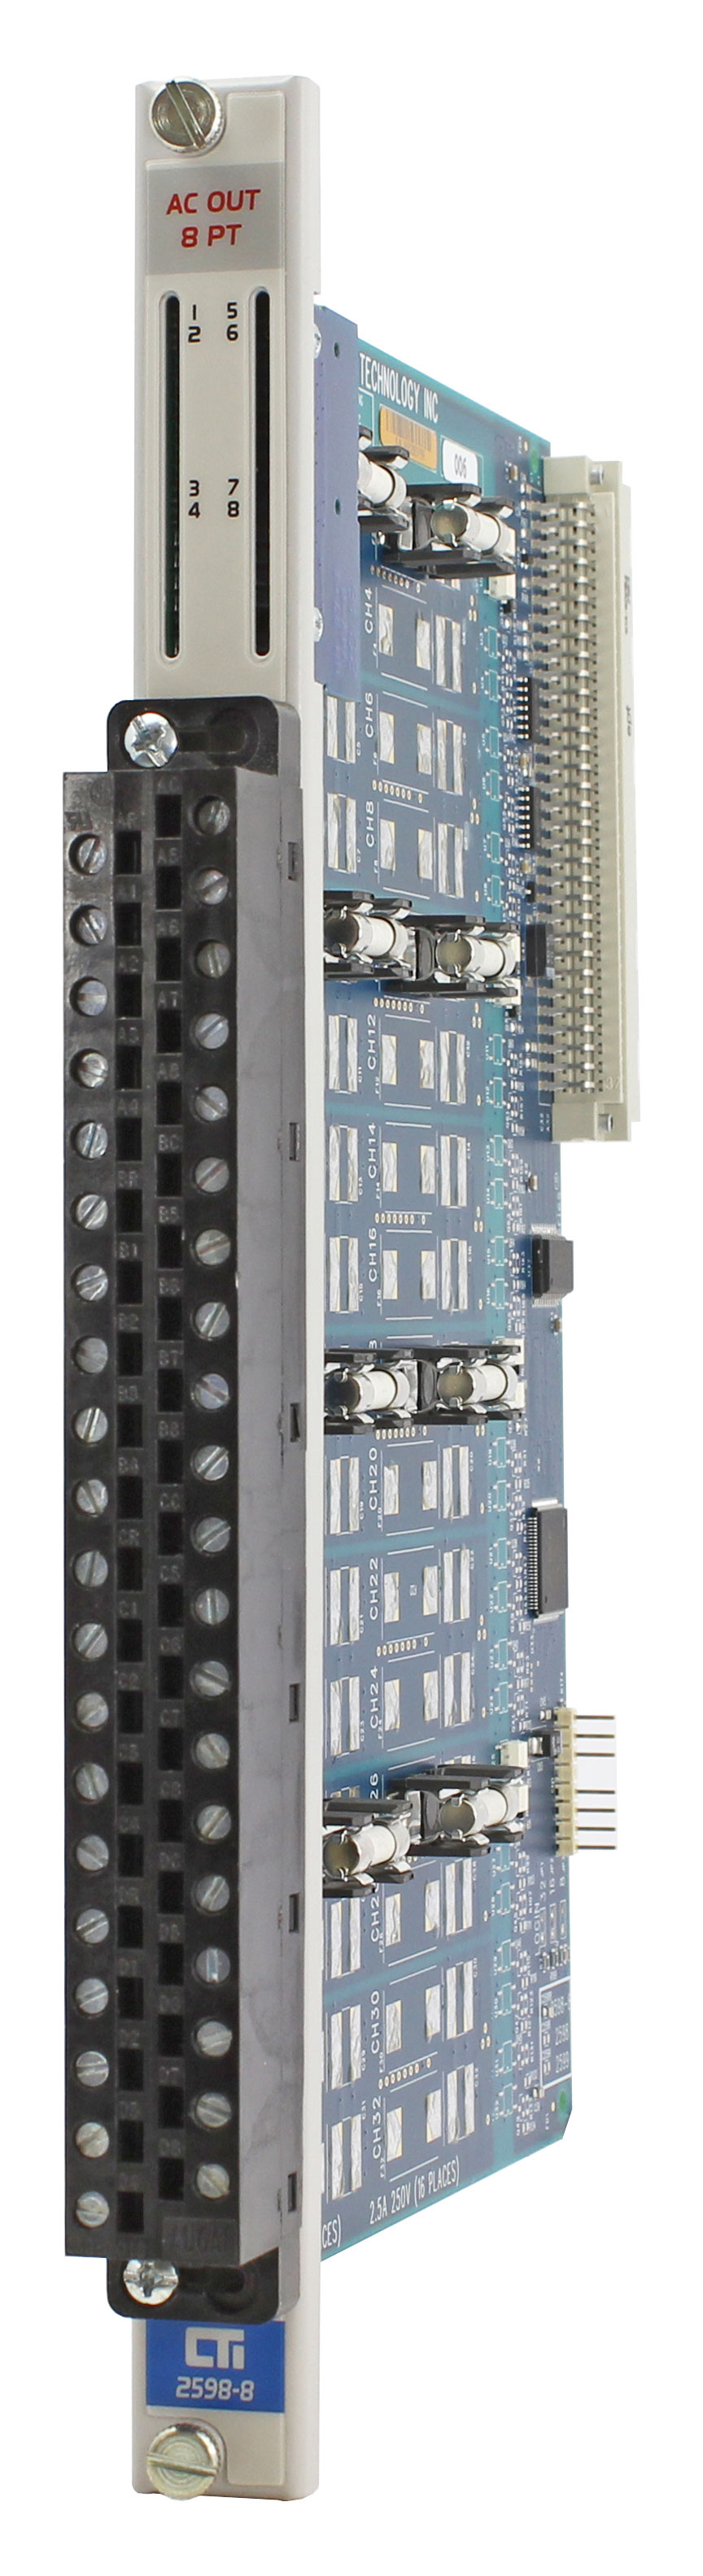 2598-8 8-Point AC Output Module